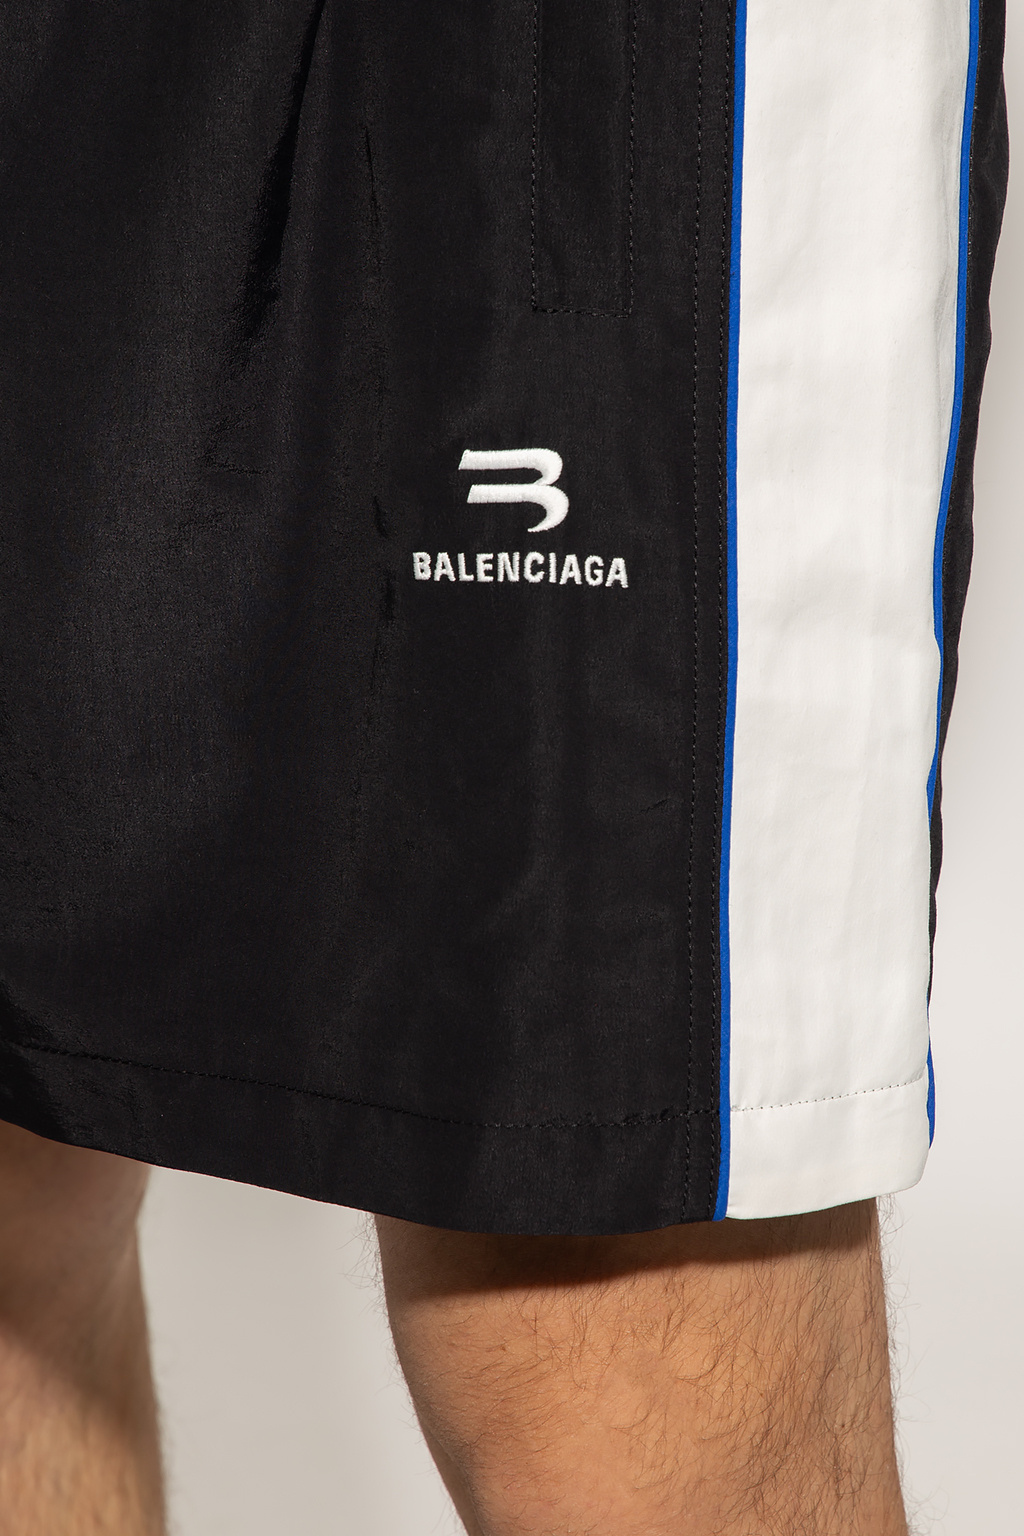 Balenciaga Tommy Hilfiger Boxer Shorts 3-Pack Brief Ανδρικά Μπόξερ